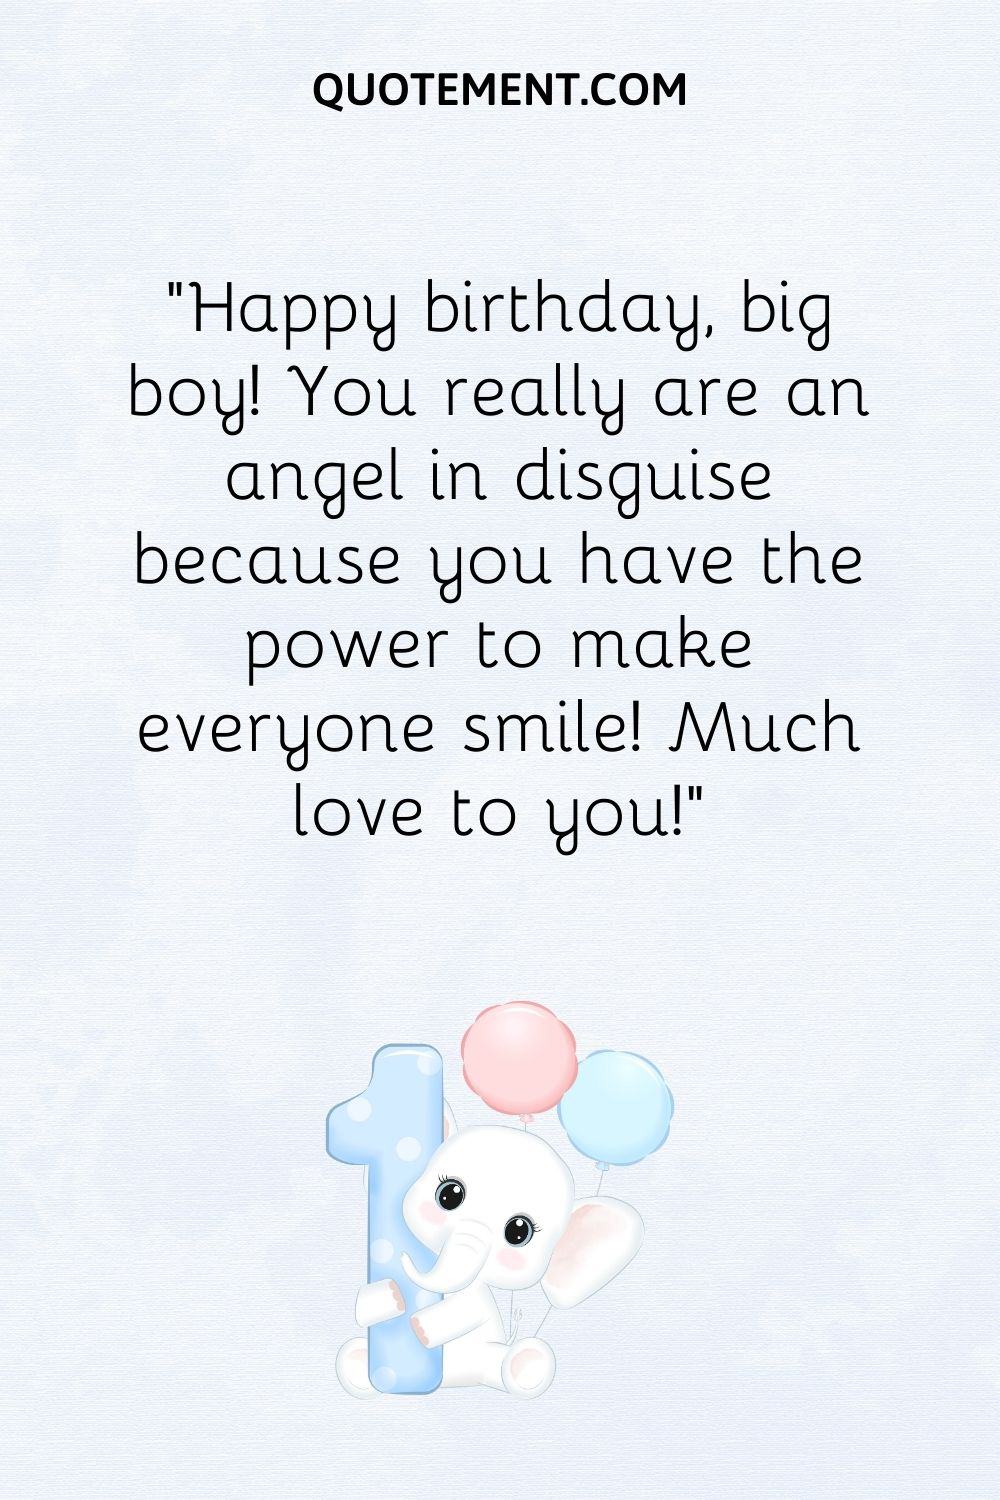 birthday illustration representing happy first birthday boy wish